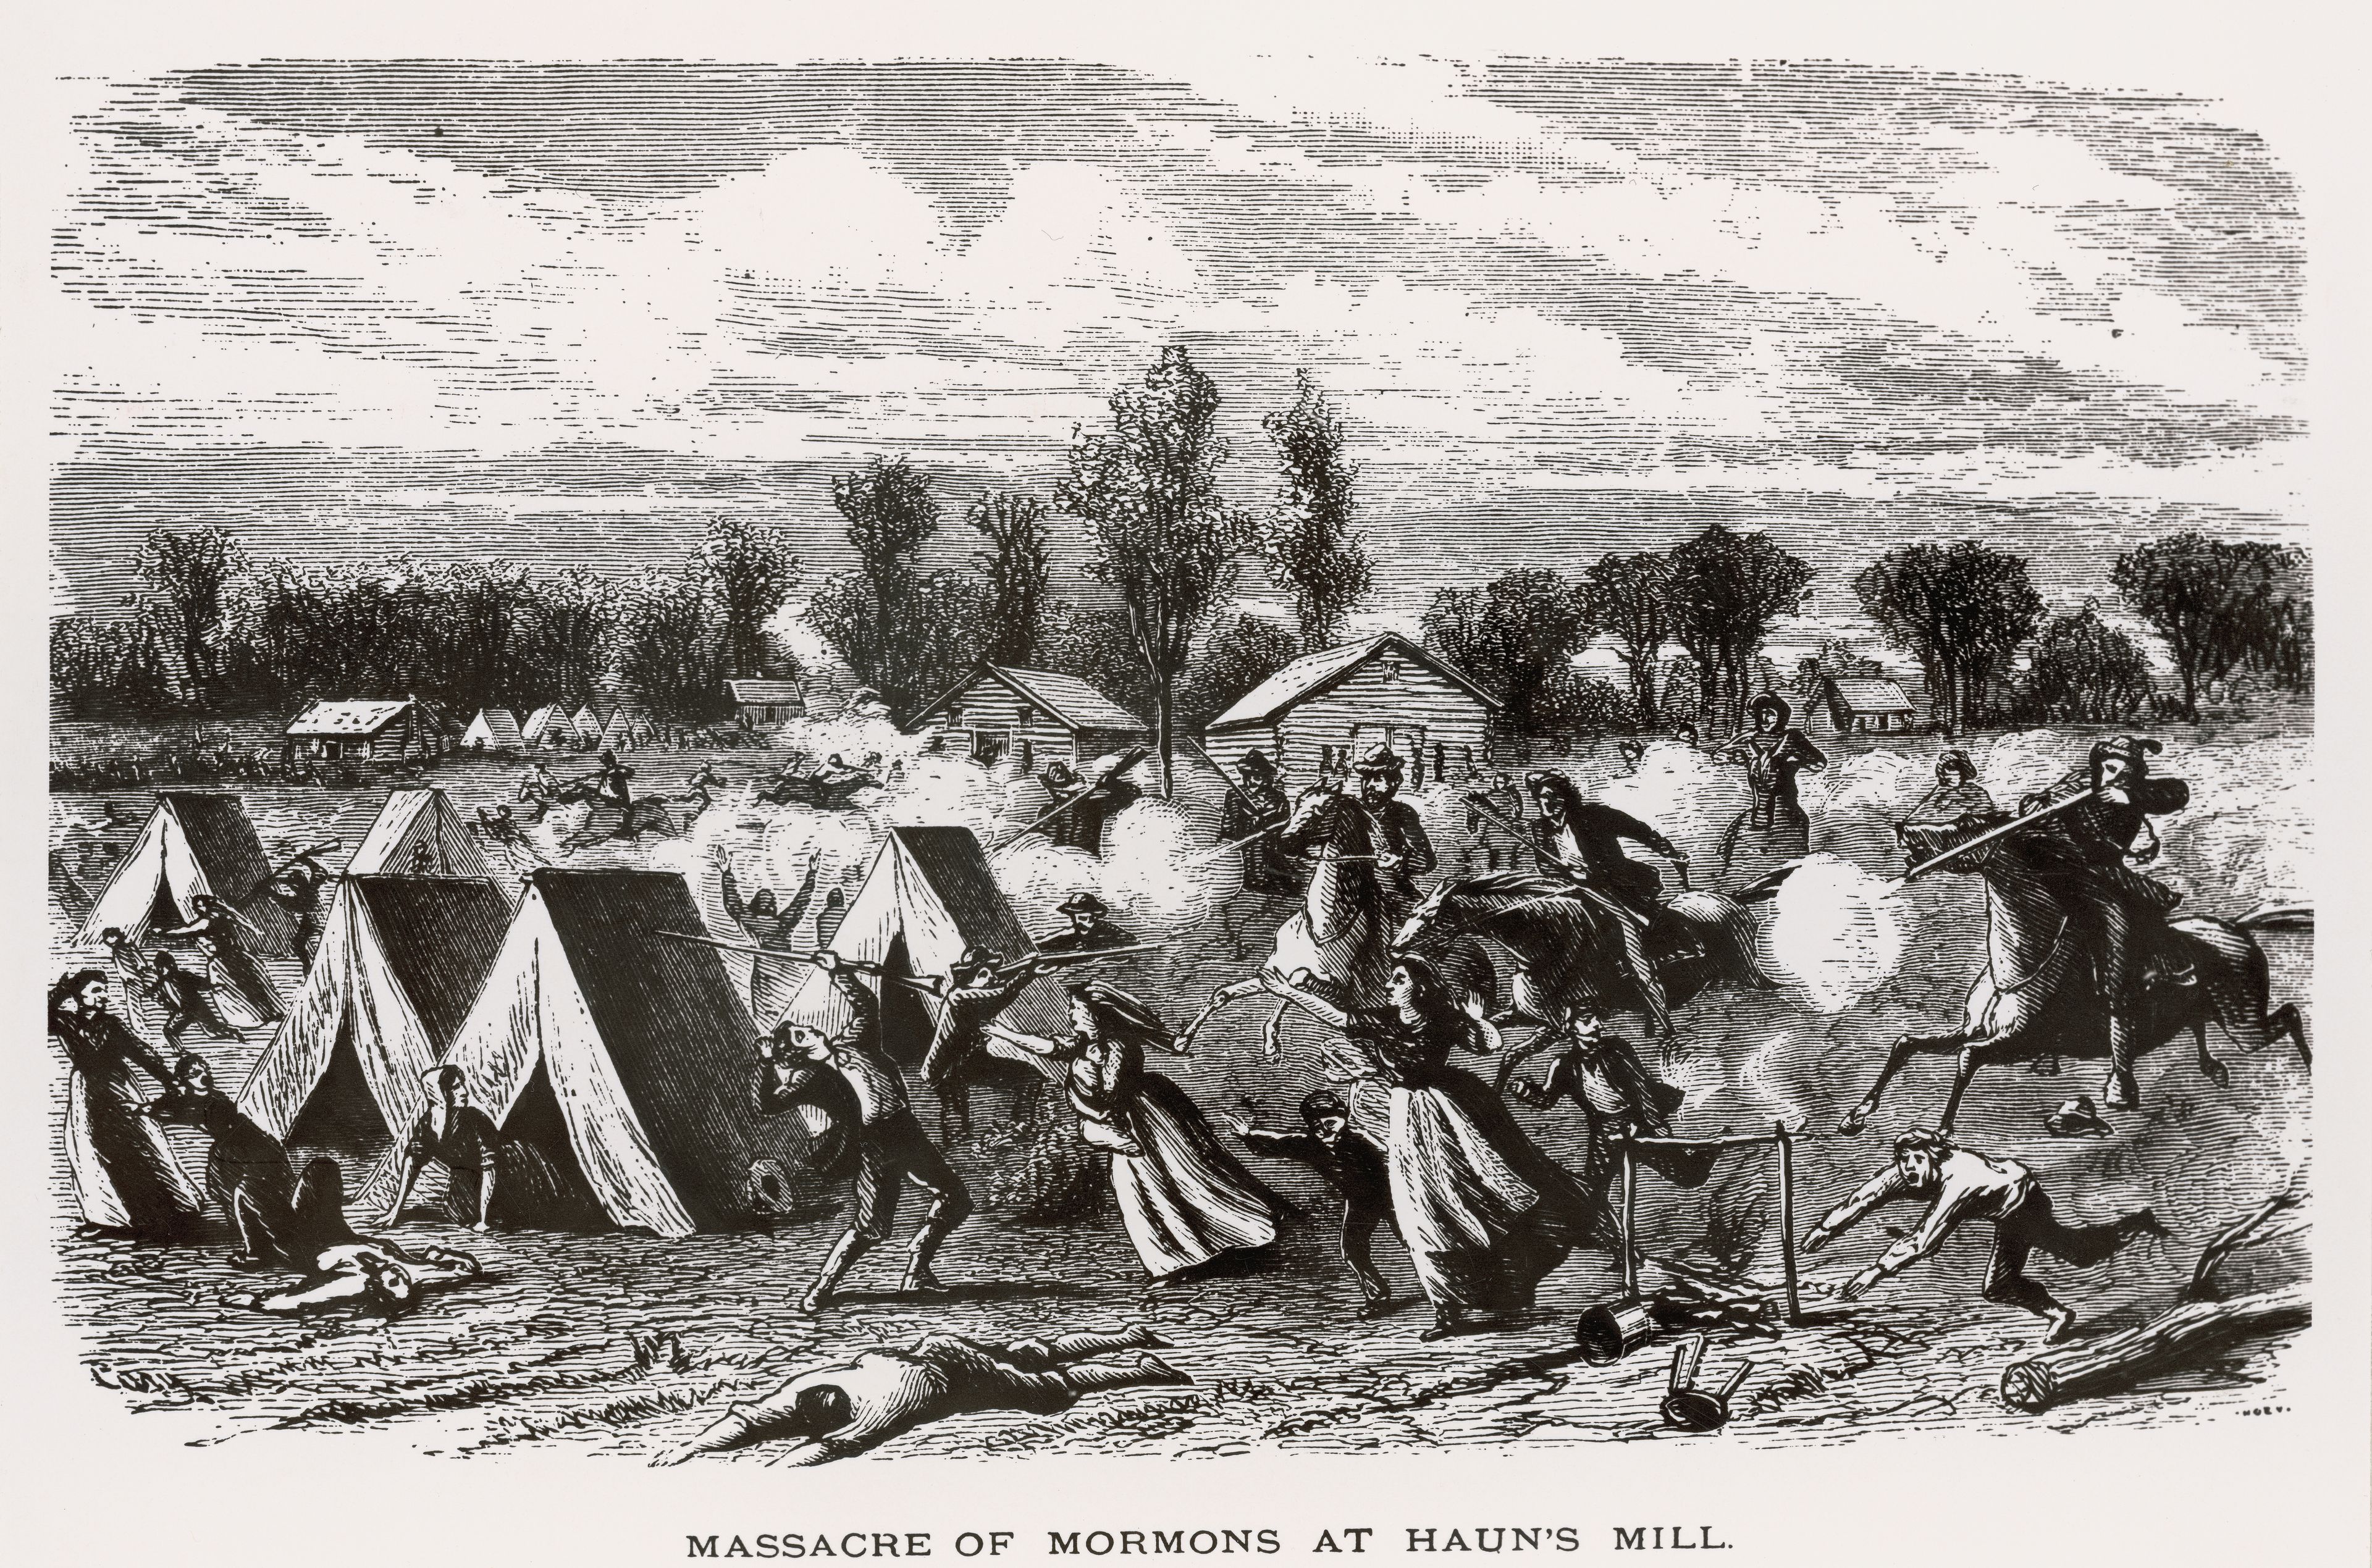 Massacre of Mormons at Haun’s Mill, artist unknown